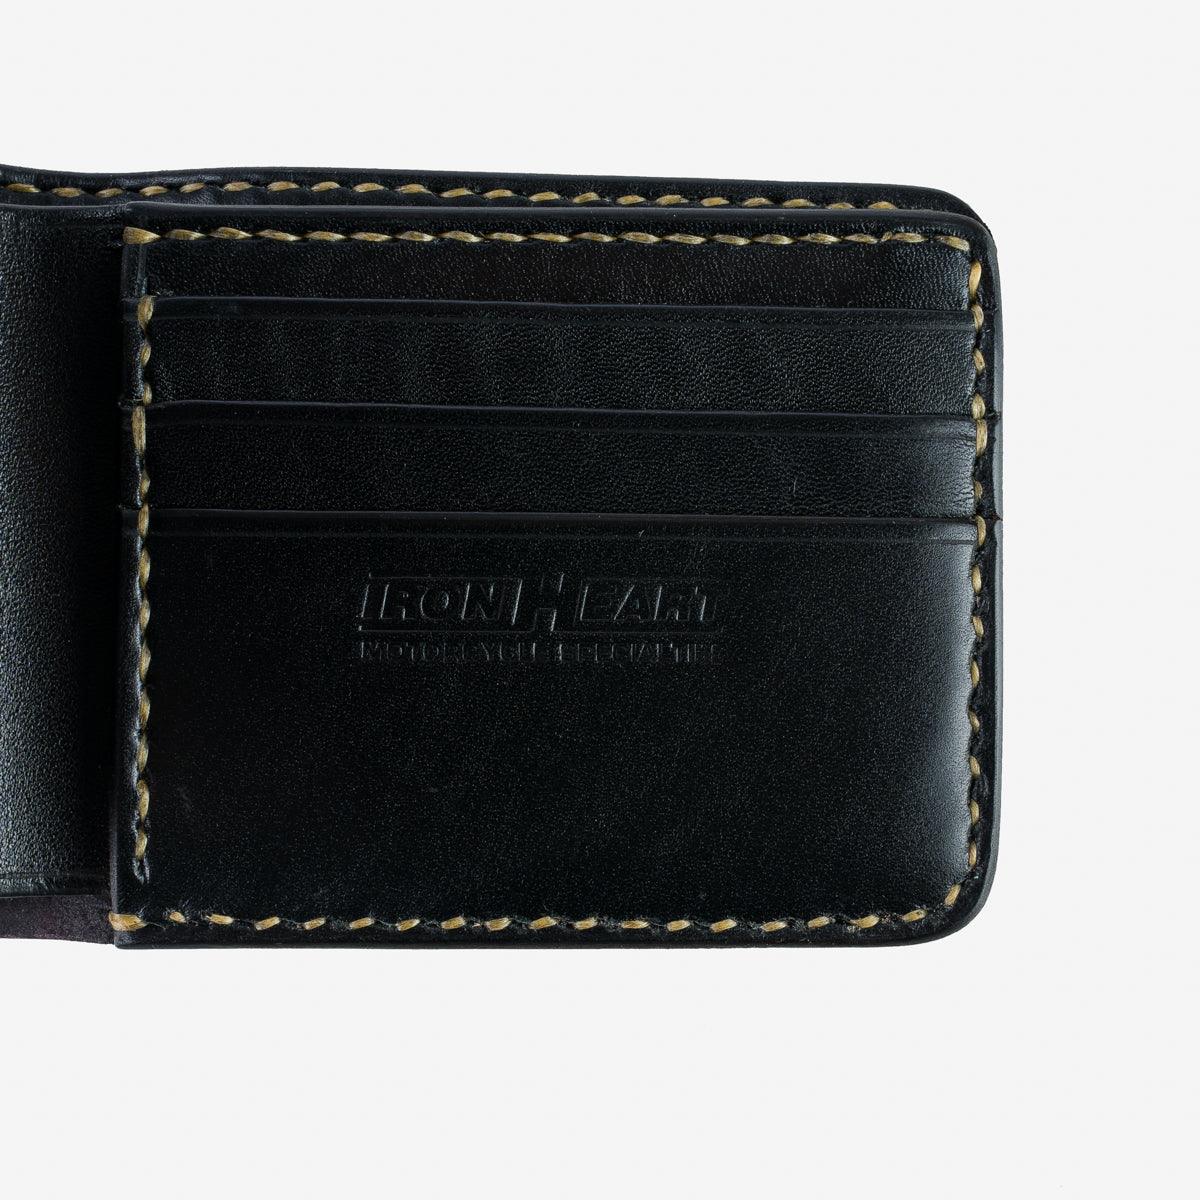 IHG-01-BLK - Small Shell Cordovan Wallet - Black